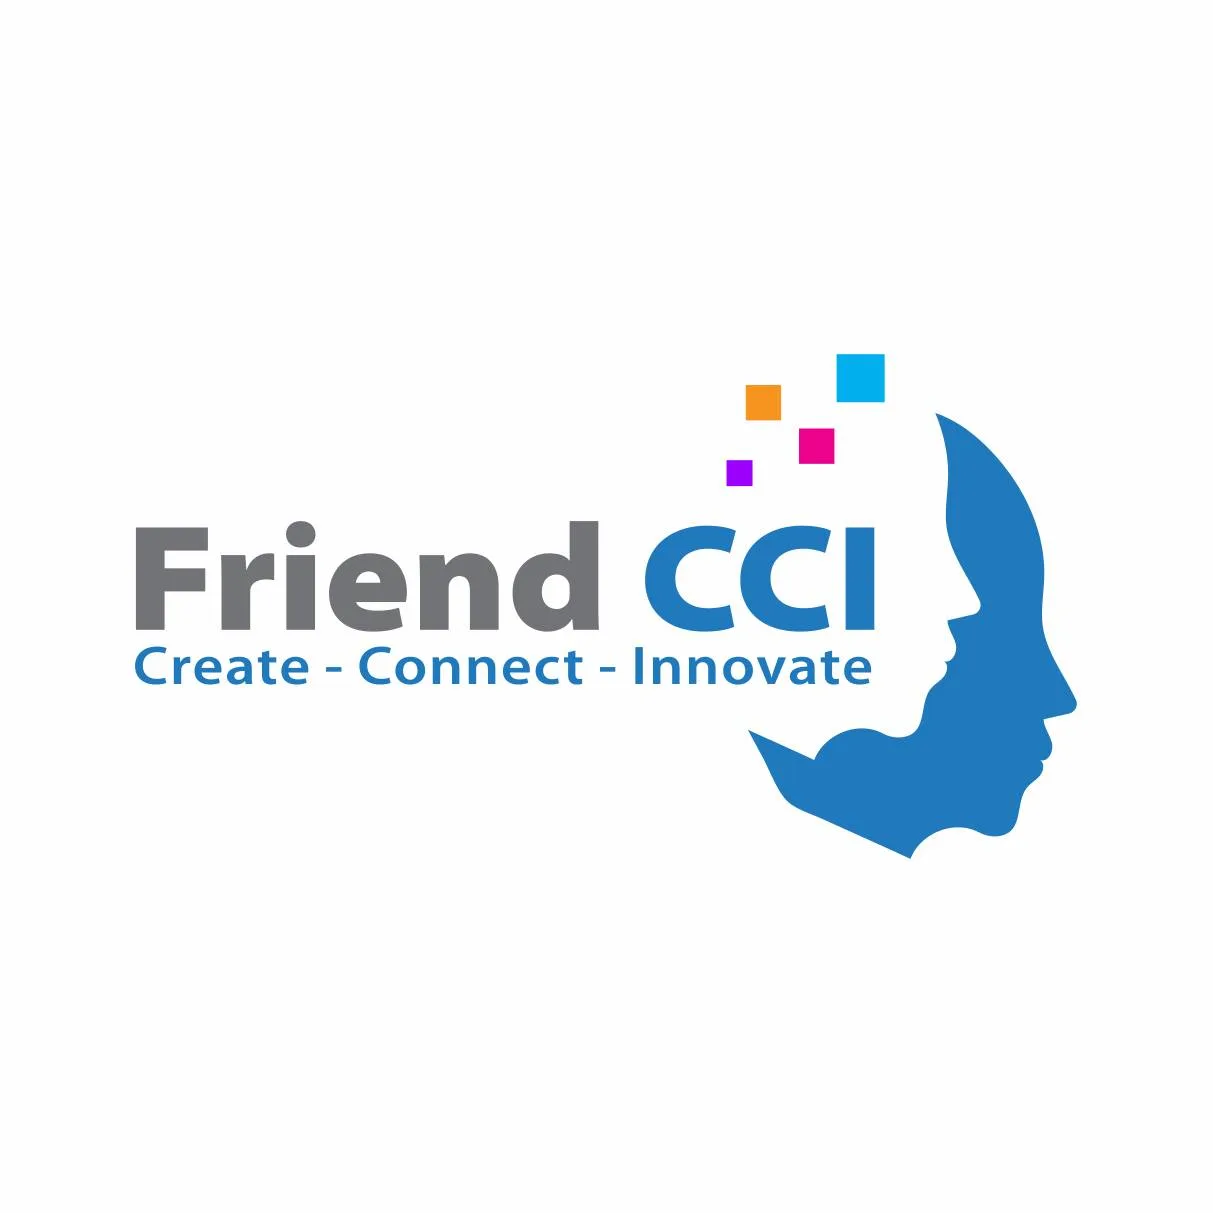 Friend cci logo jpg